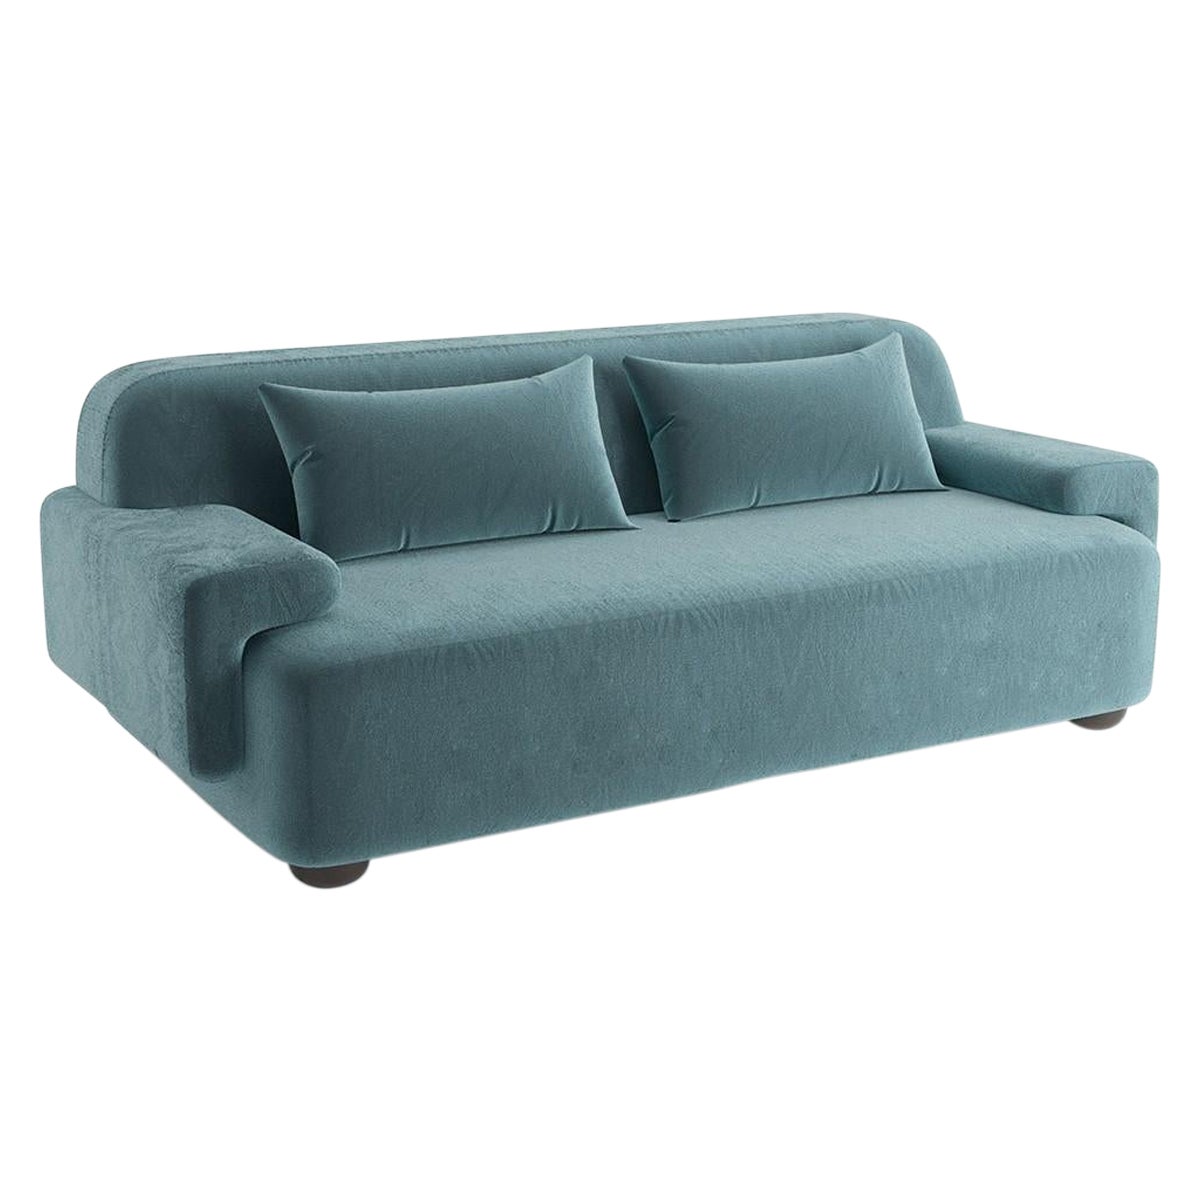 Popus Editions Lena 2.5 Seater Sofa in Blue Verone Velvet Upholstery